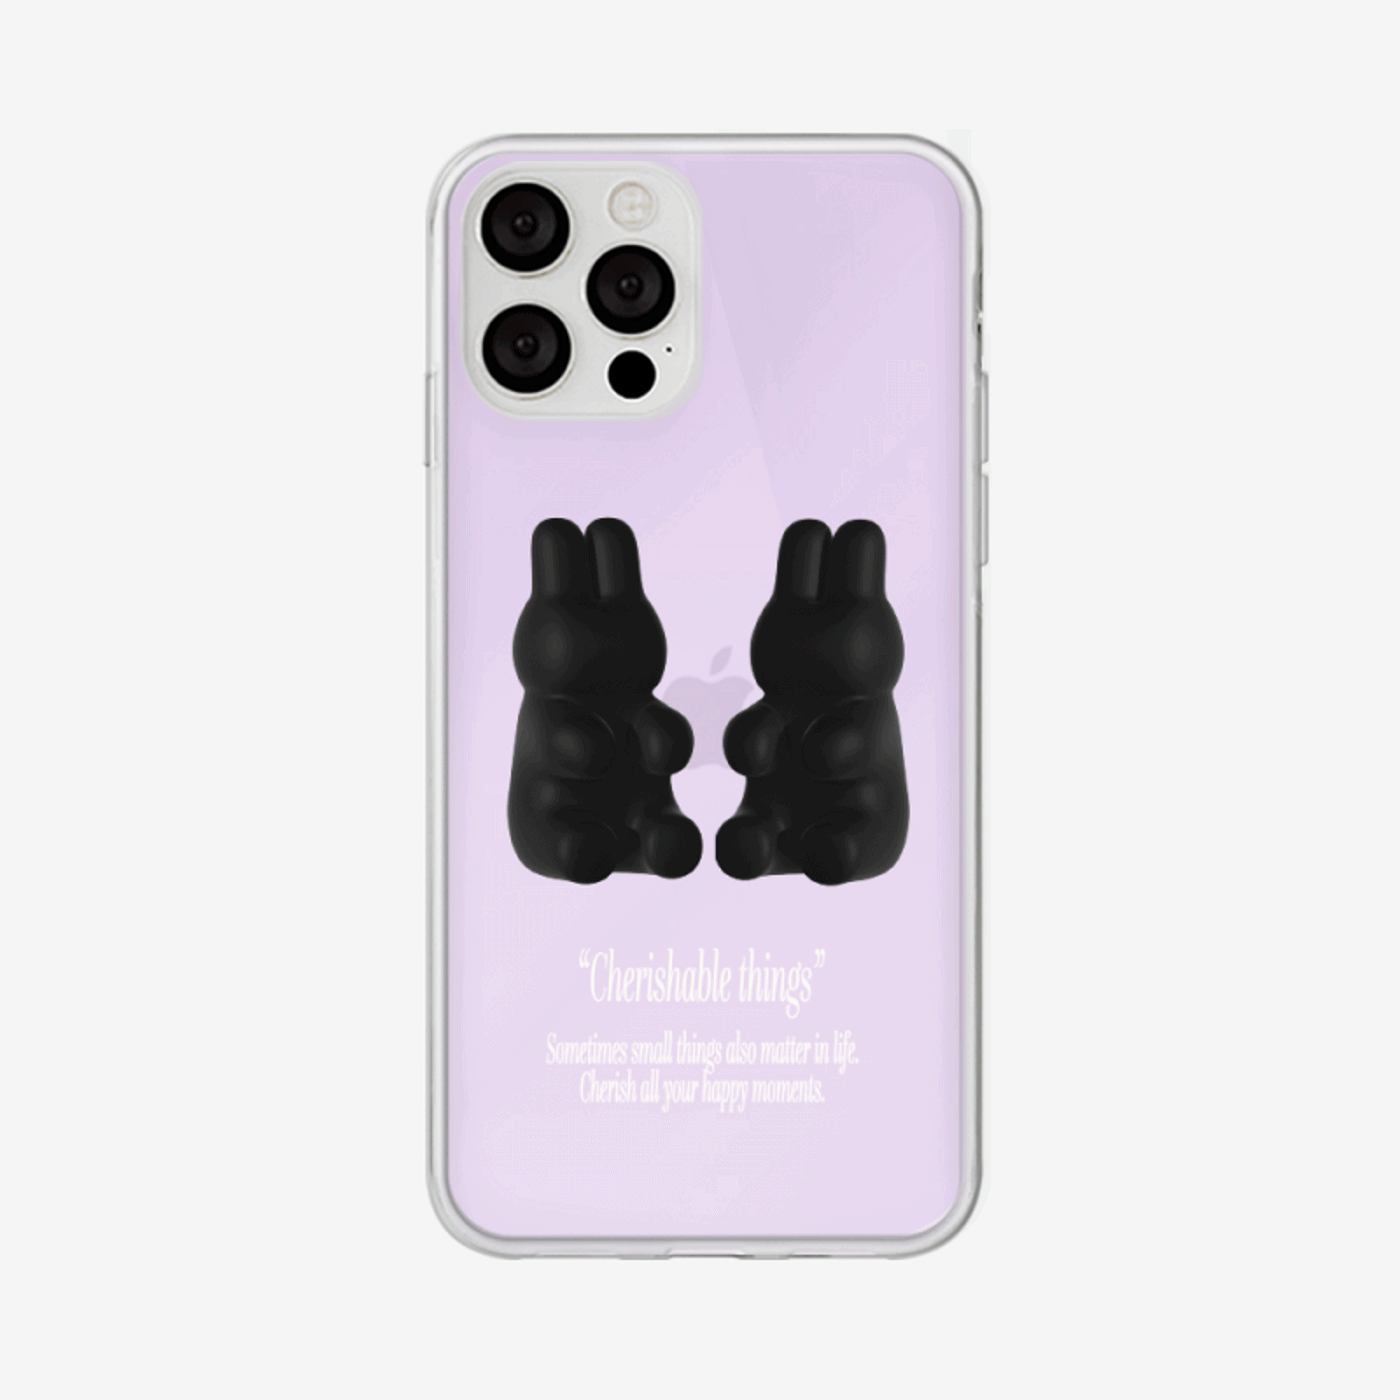 cherishable things design [glossy mirror phone case]